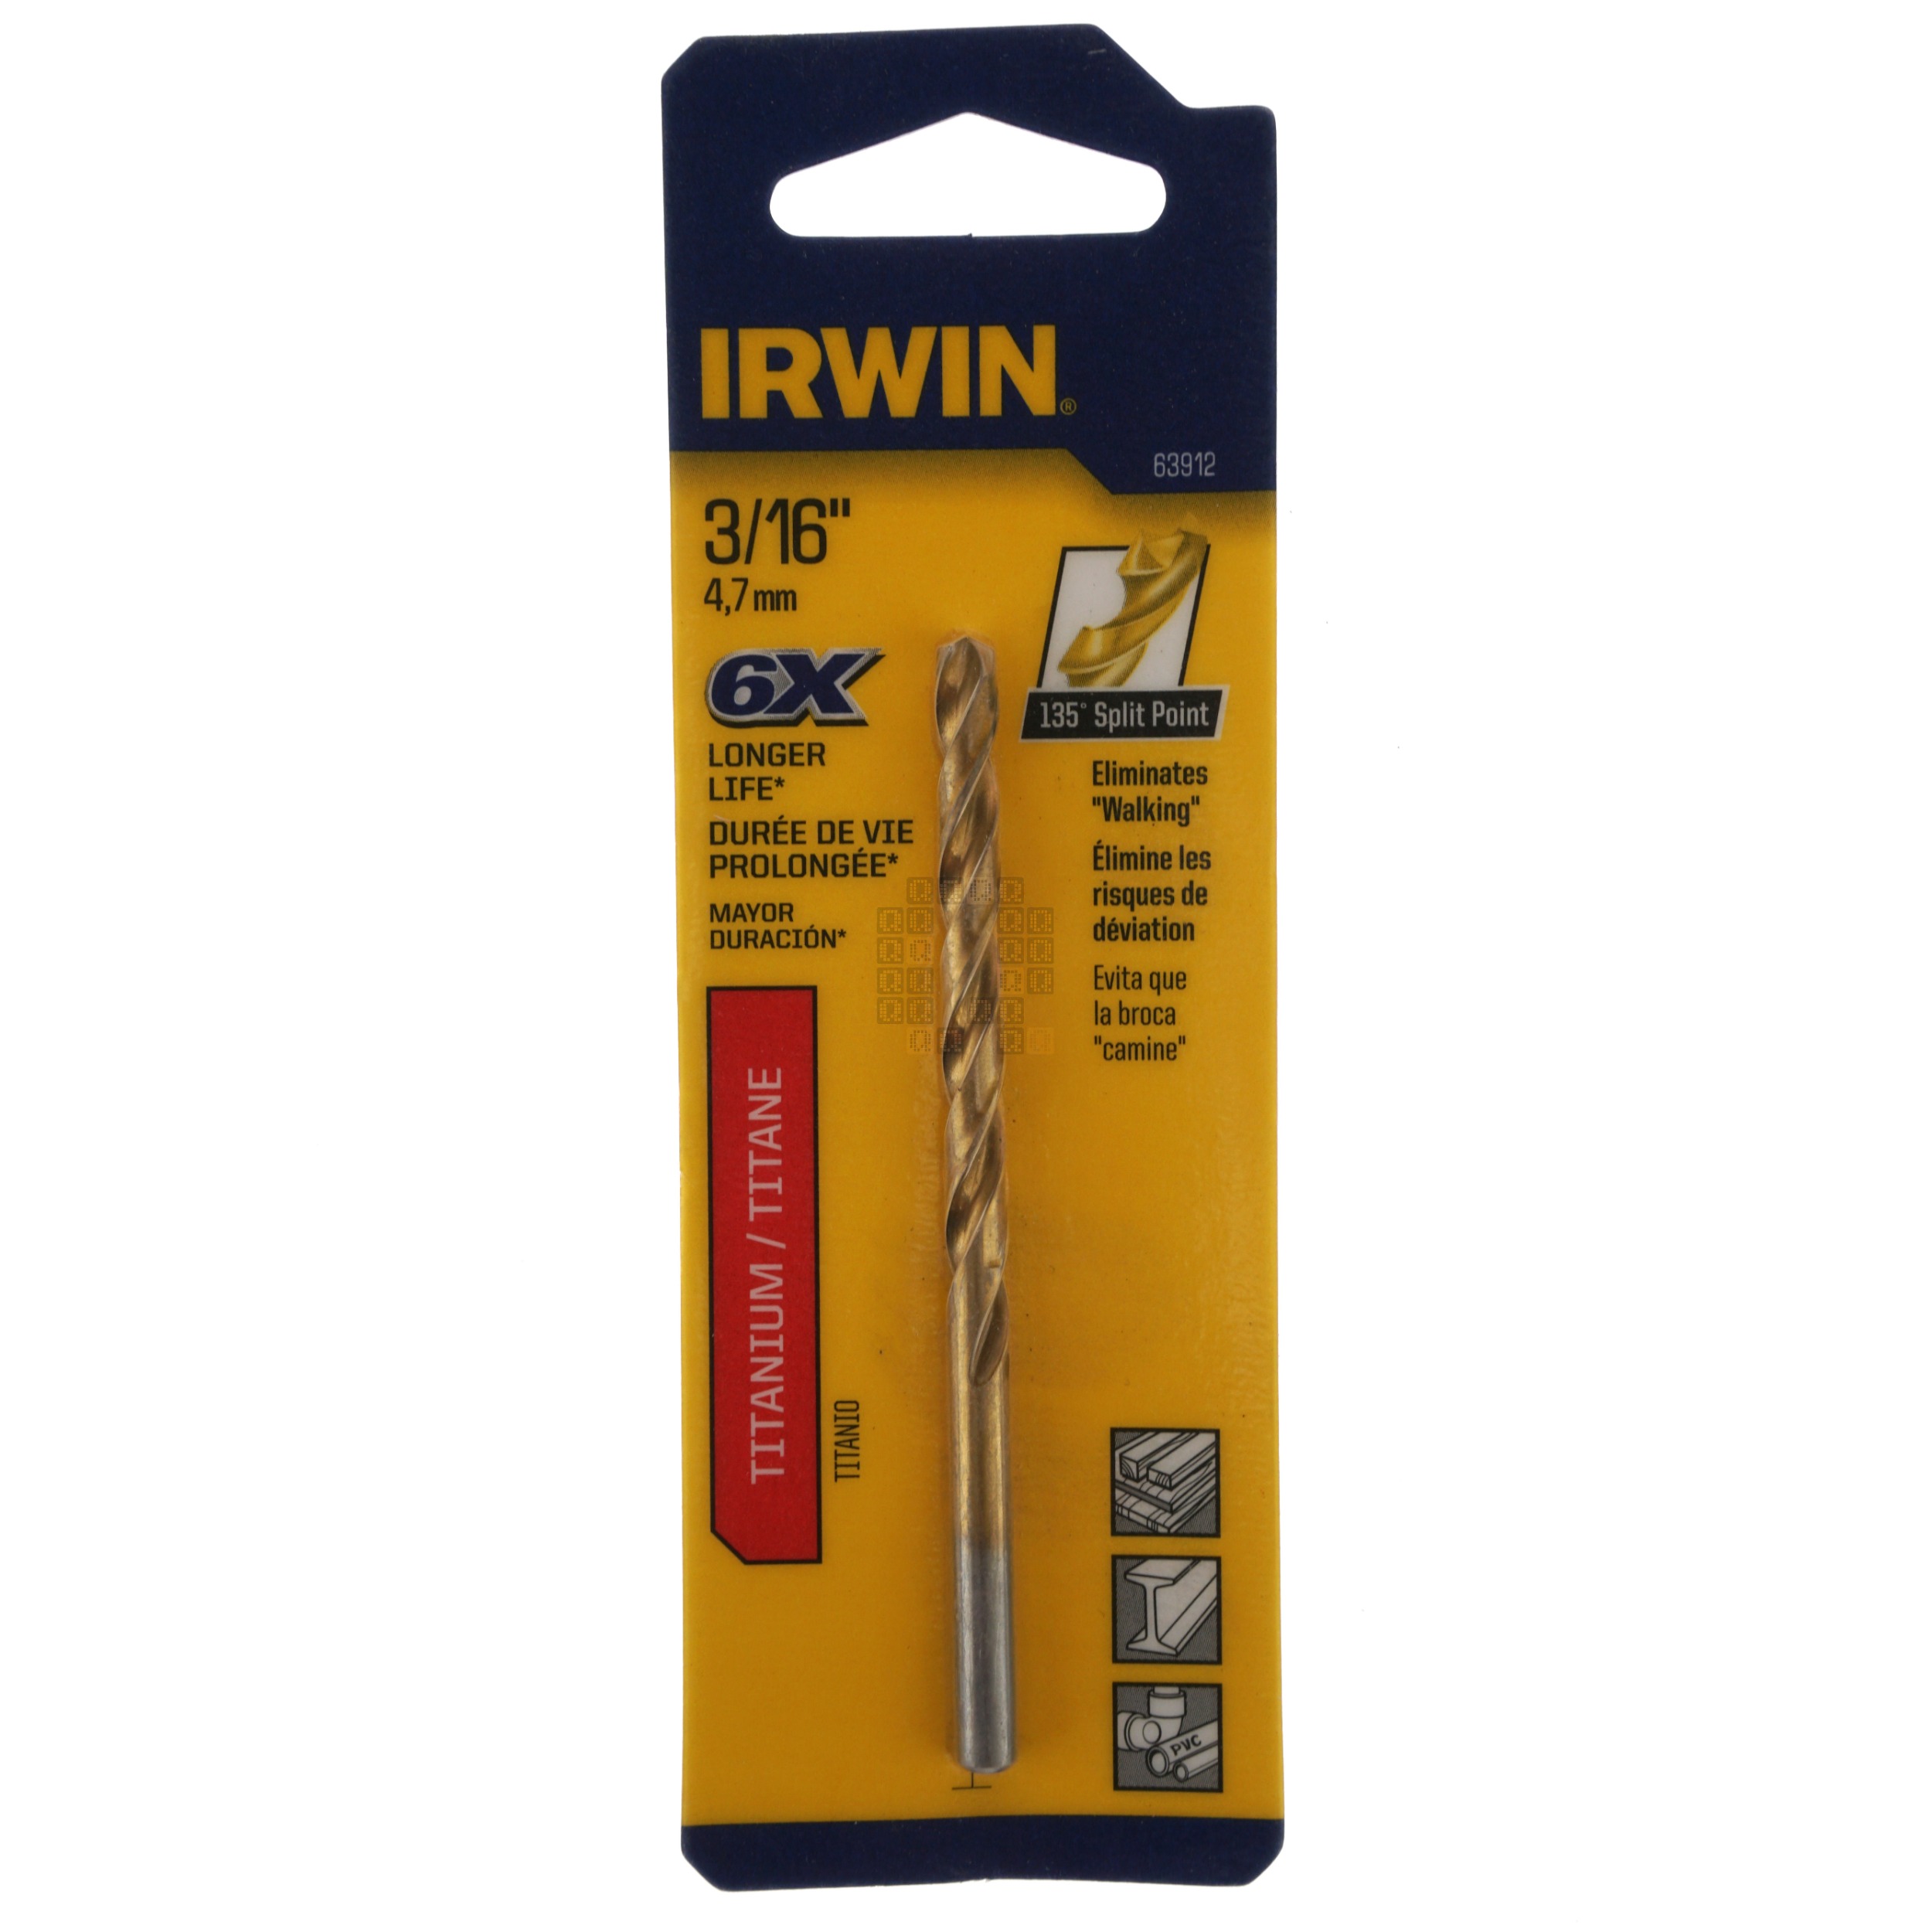 Irwin 63912 3/16" Titanium Nitride Coated 135° Split Point Drill Bit